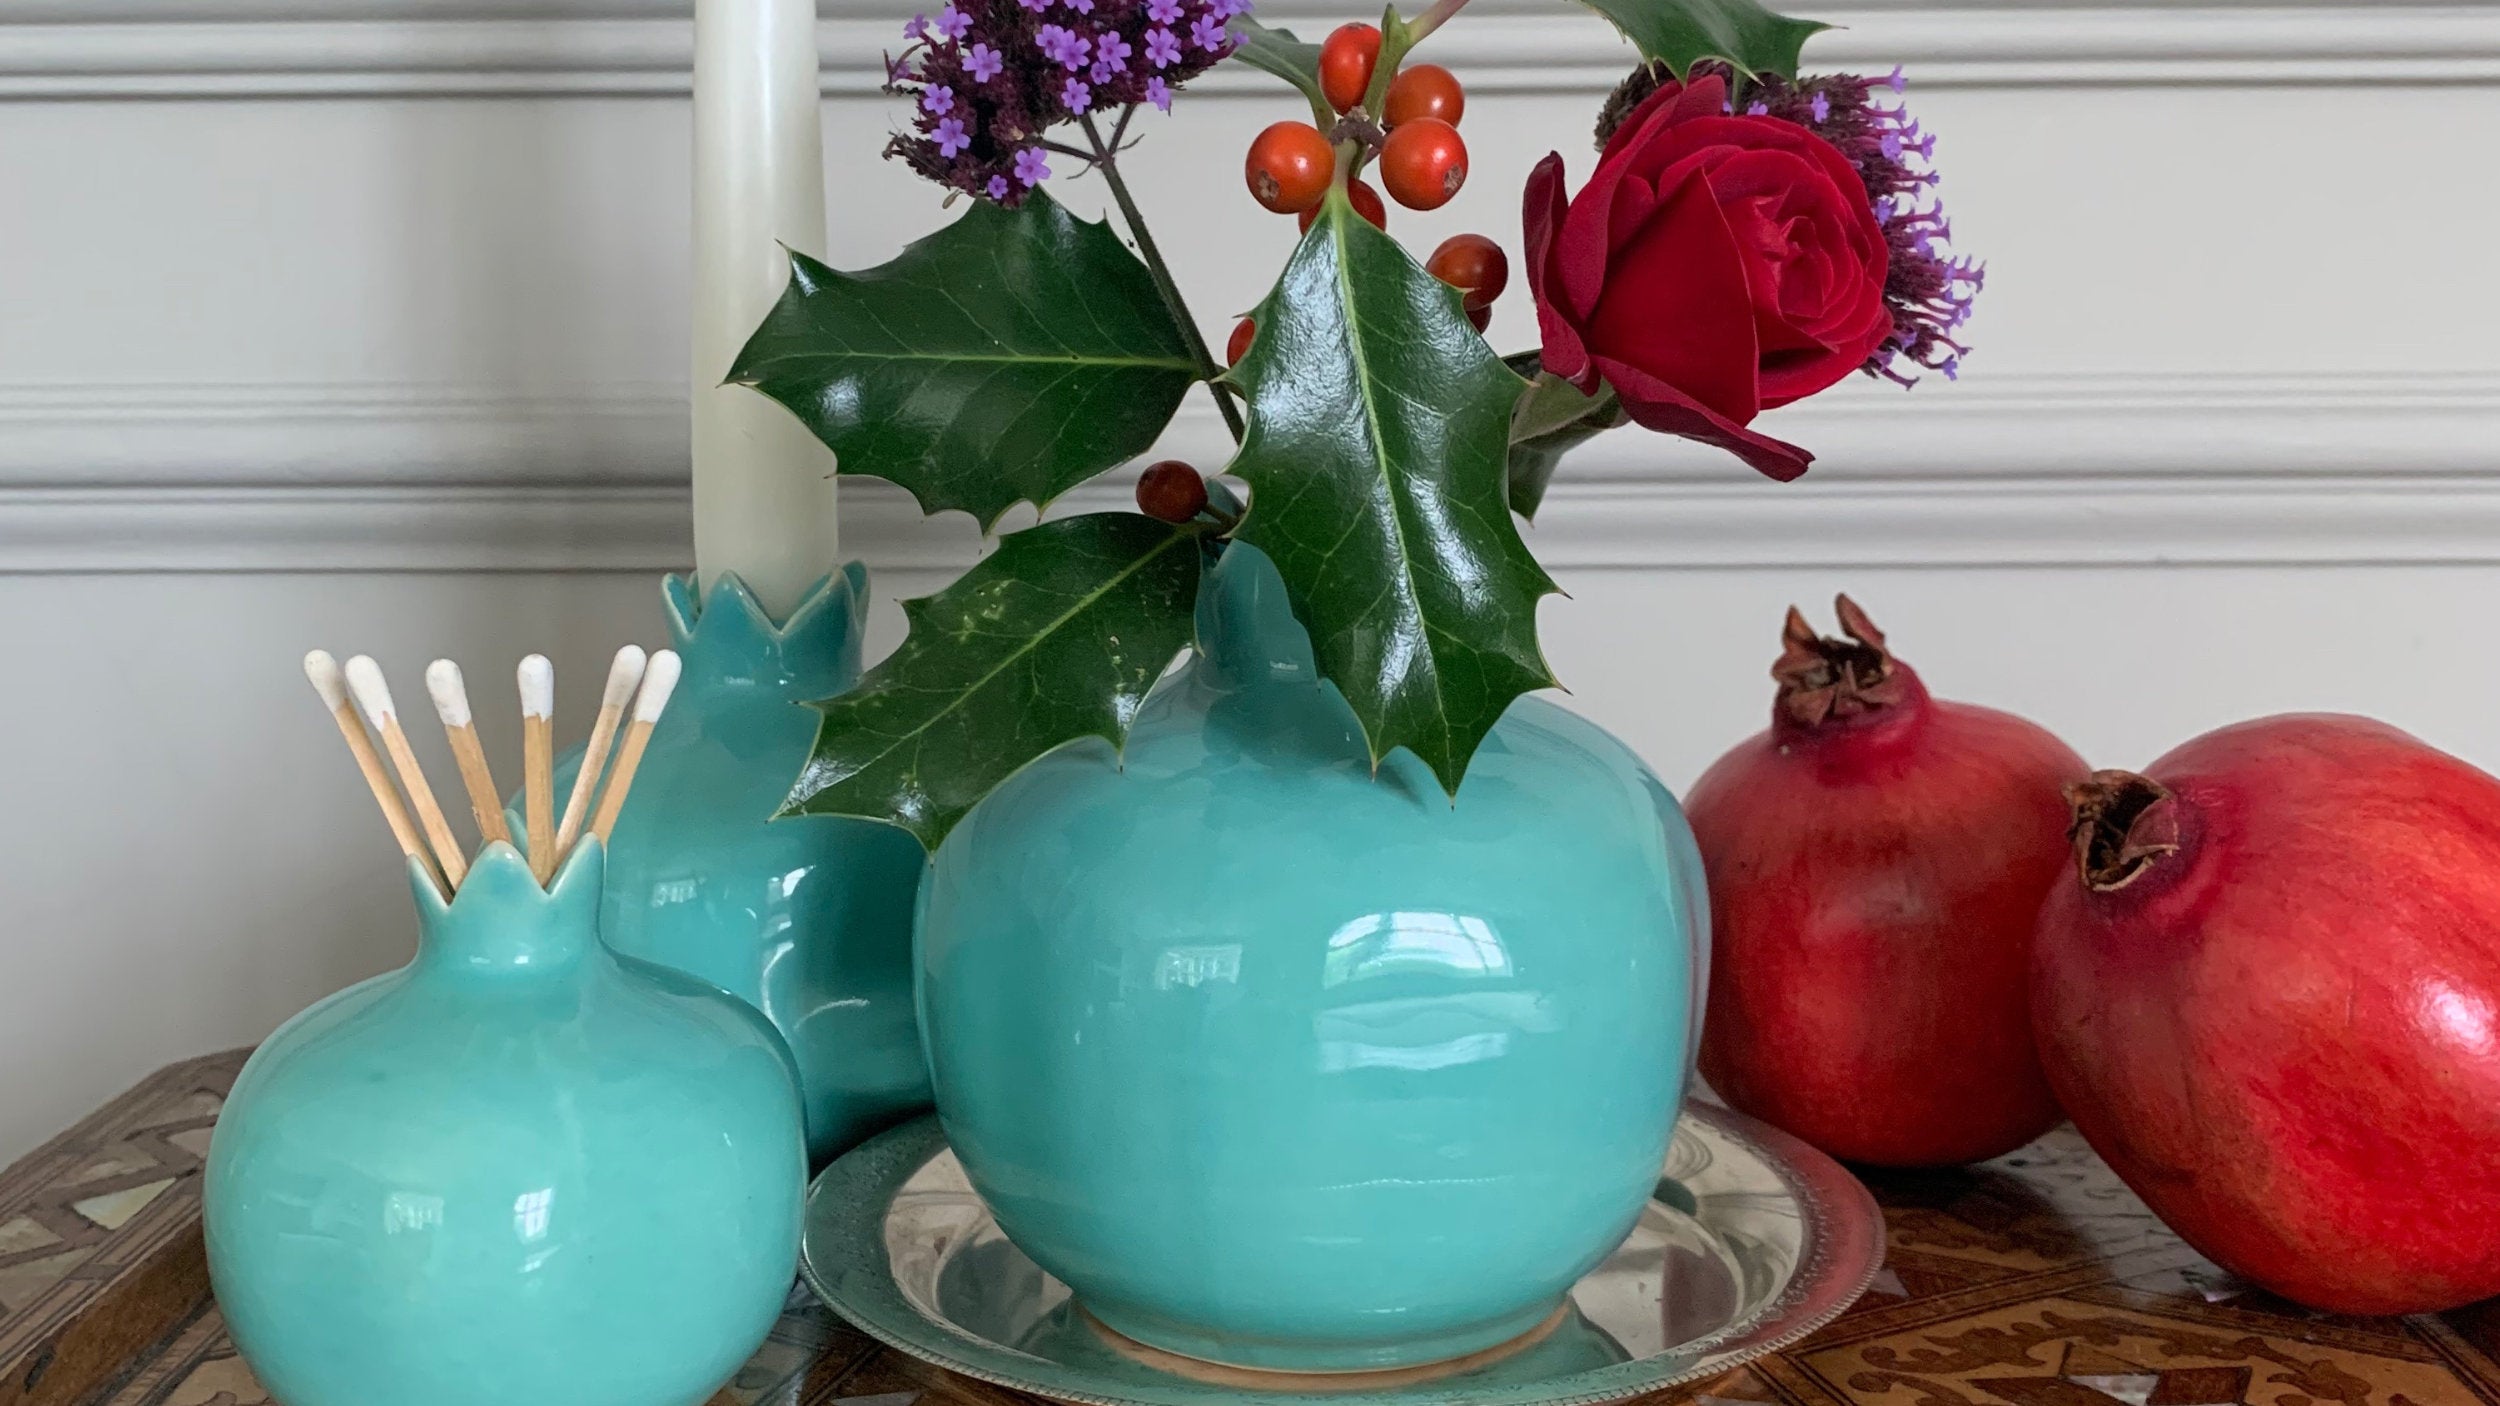 Turkish ceramics handmade hand-painted pomegranate vase bud vase candle holder matchstick holder ornament decoration interior design inspiration 